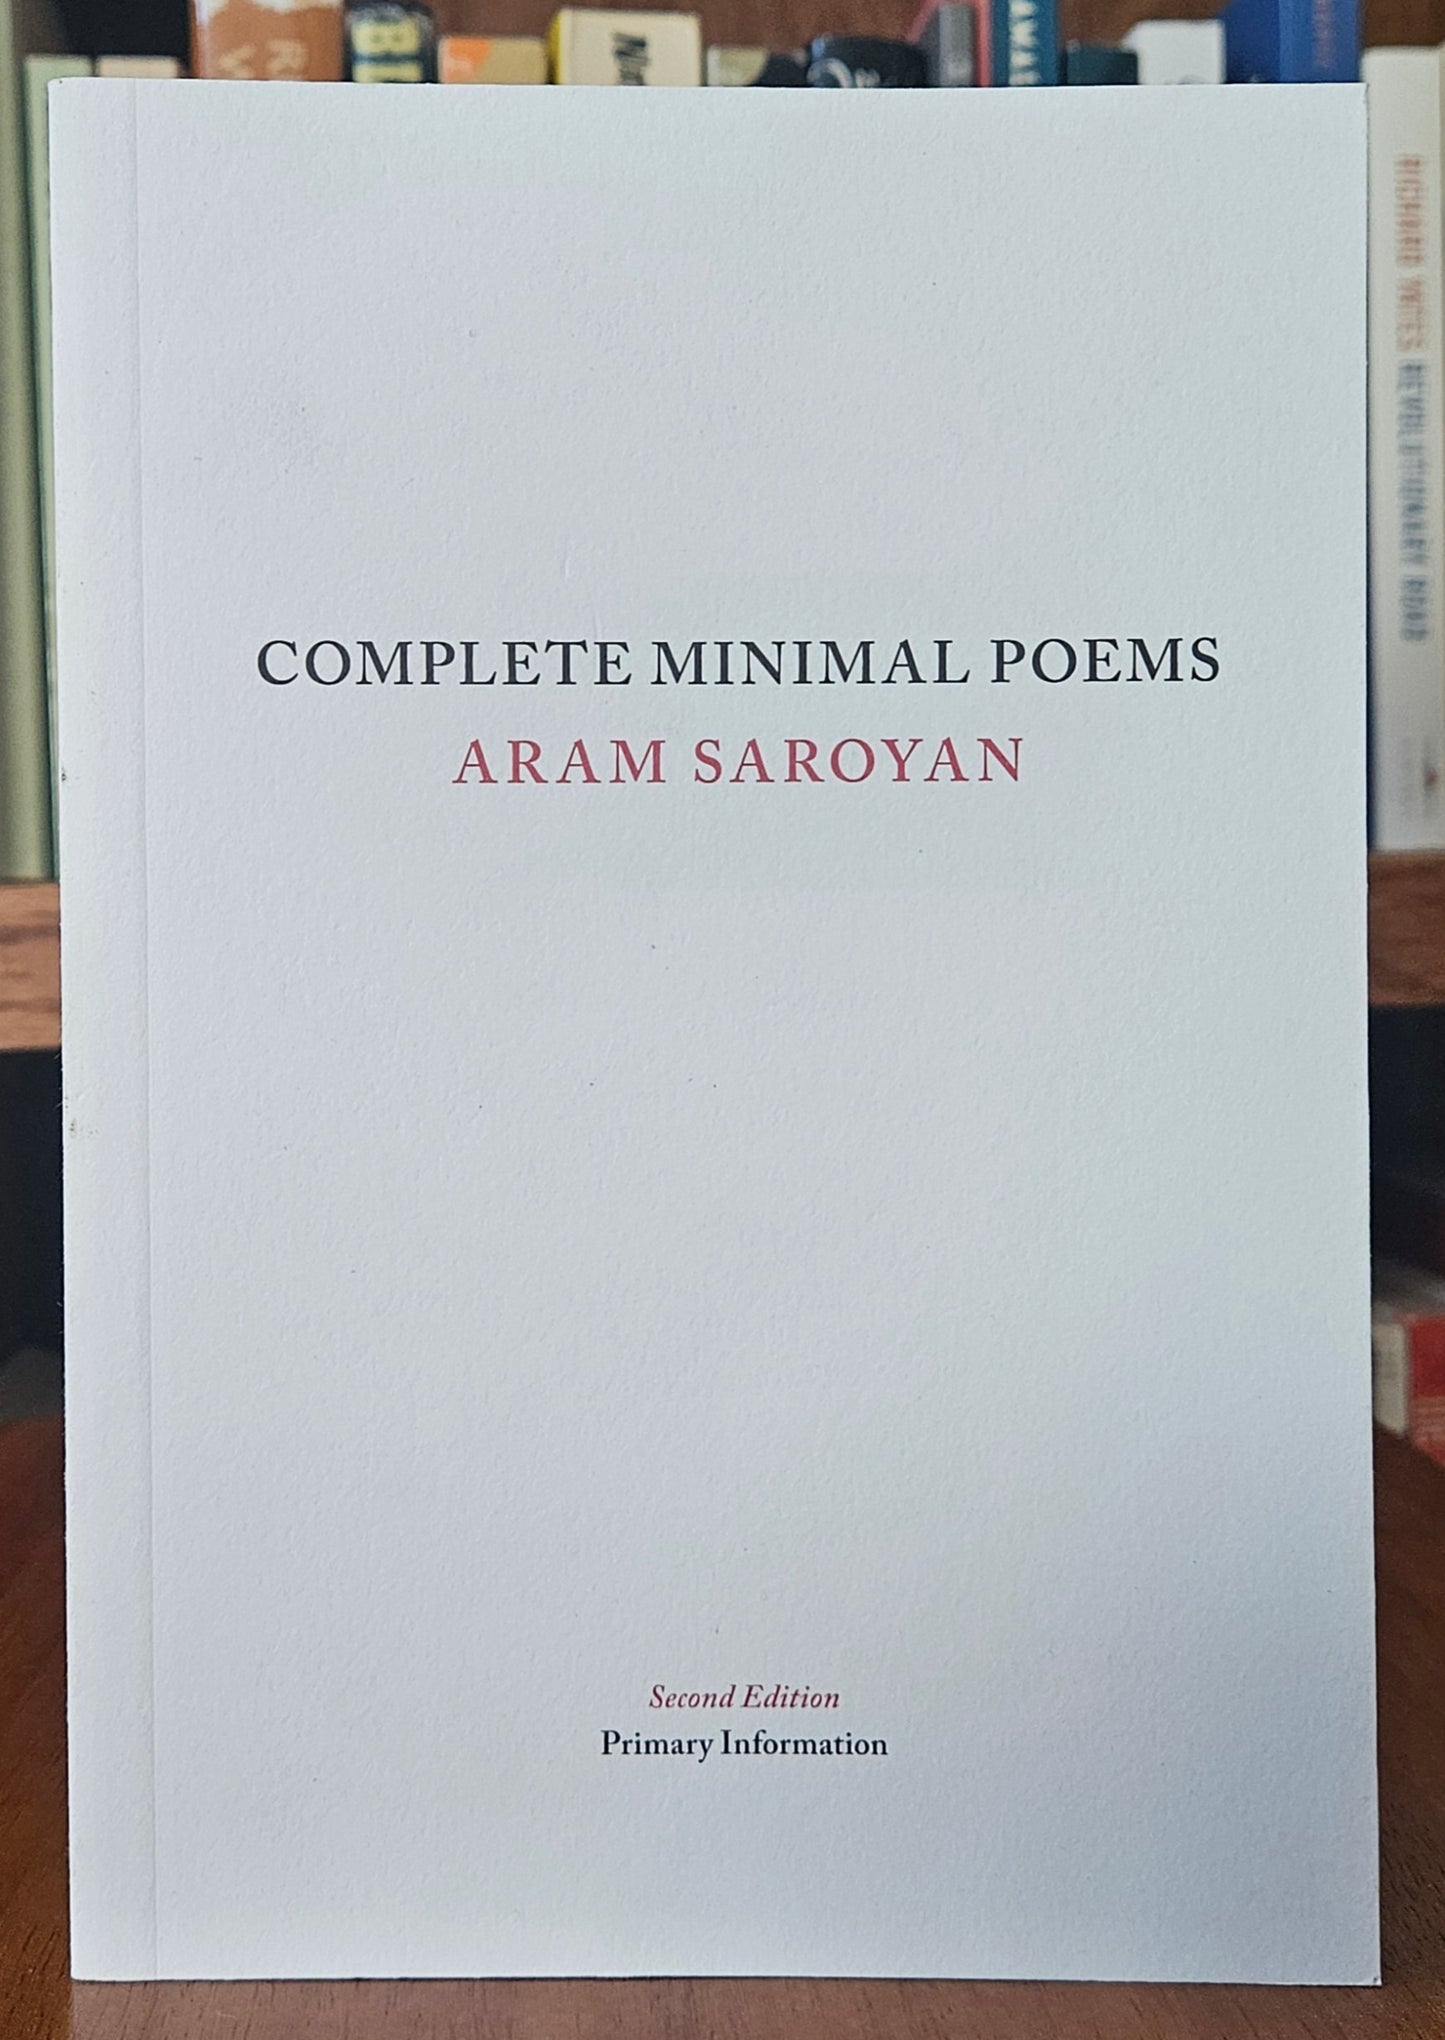 Aram Saroyan - Complete Minimal Poems